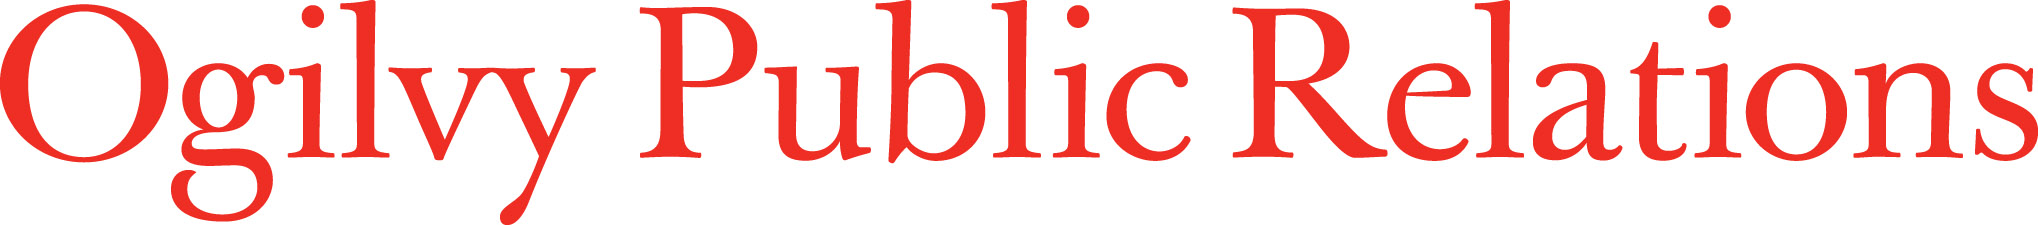  Leading Digital Public Relations Company Logo: Ogilvy Public Relations